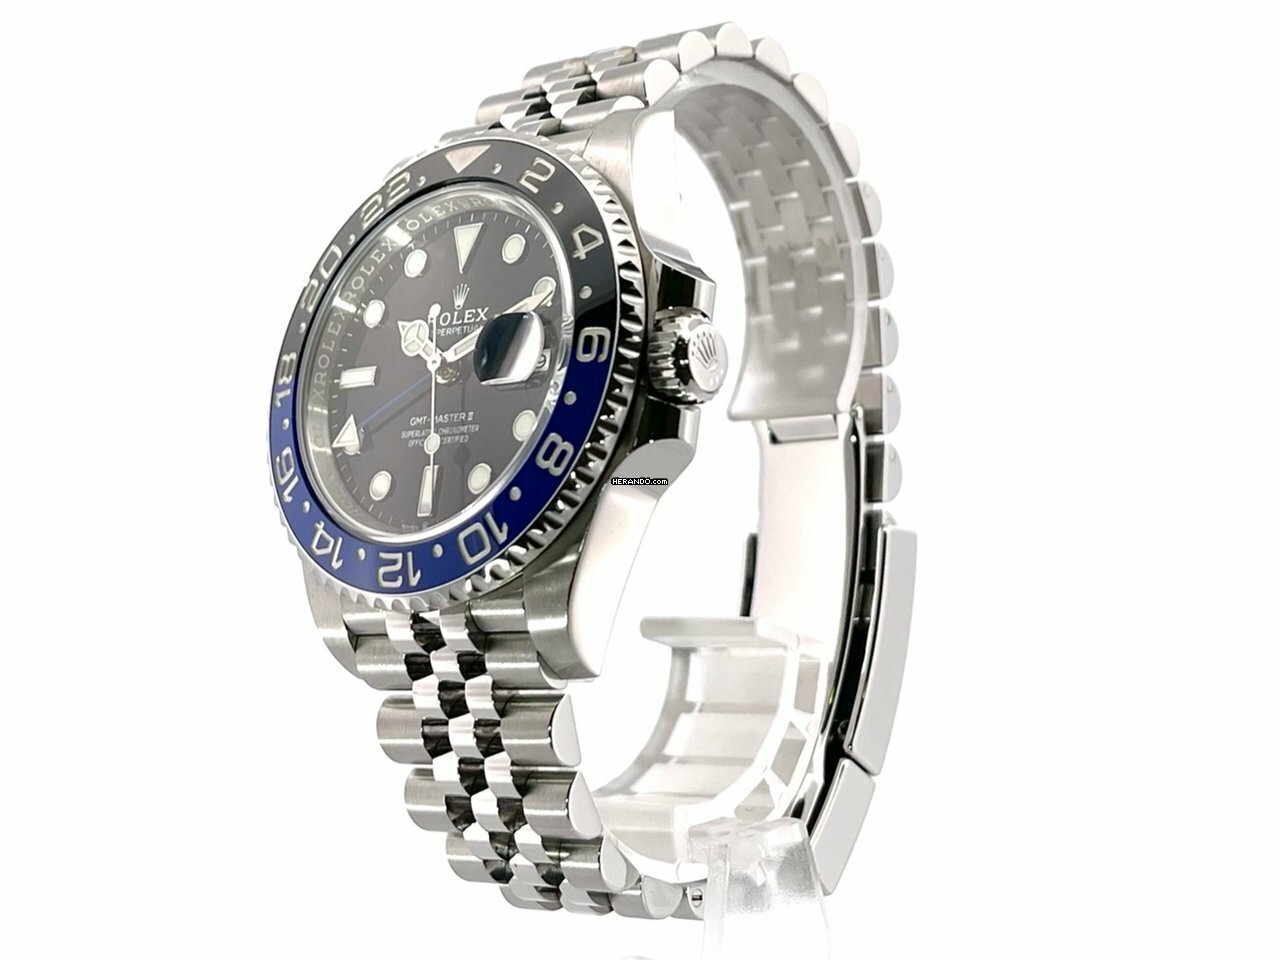 watches-322197-27660330-ccn815wom4p7m7pj8d7va8rb-ExtraLarge.jpg